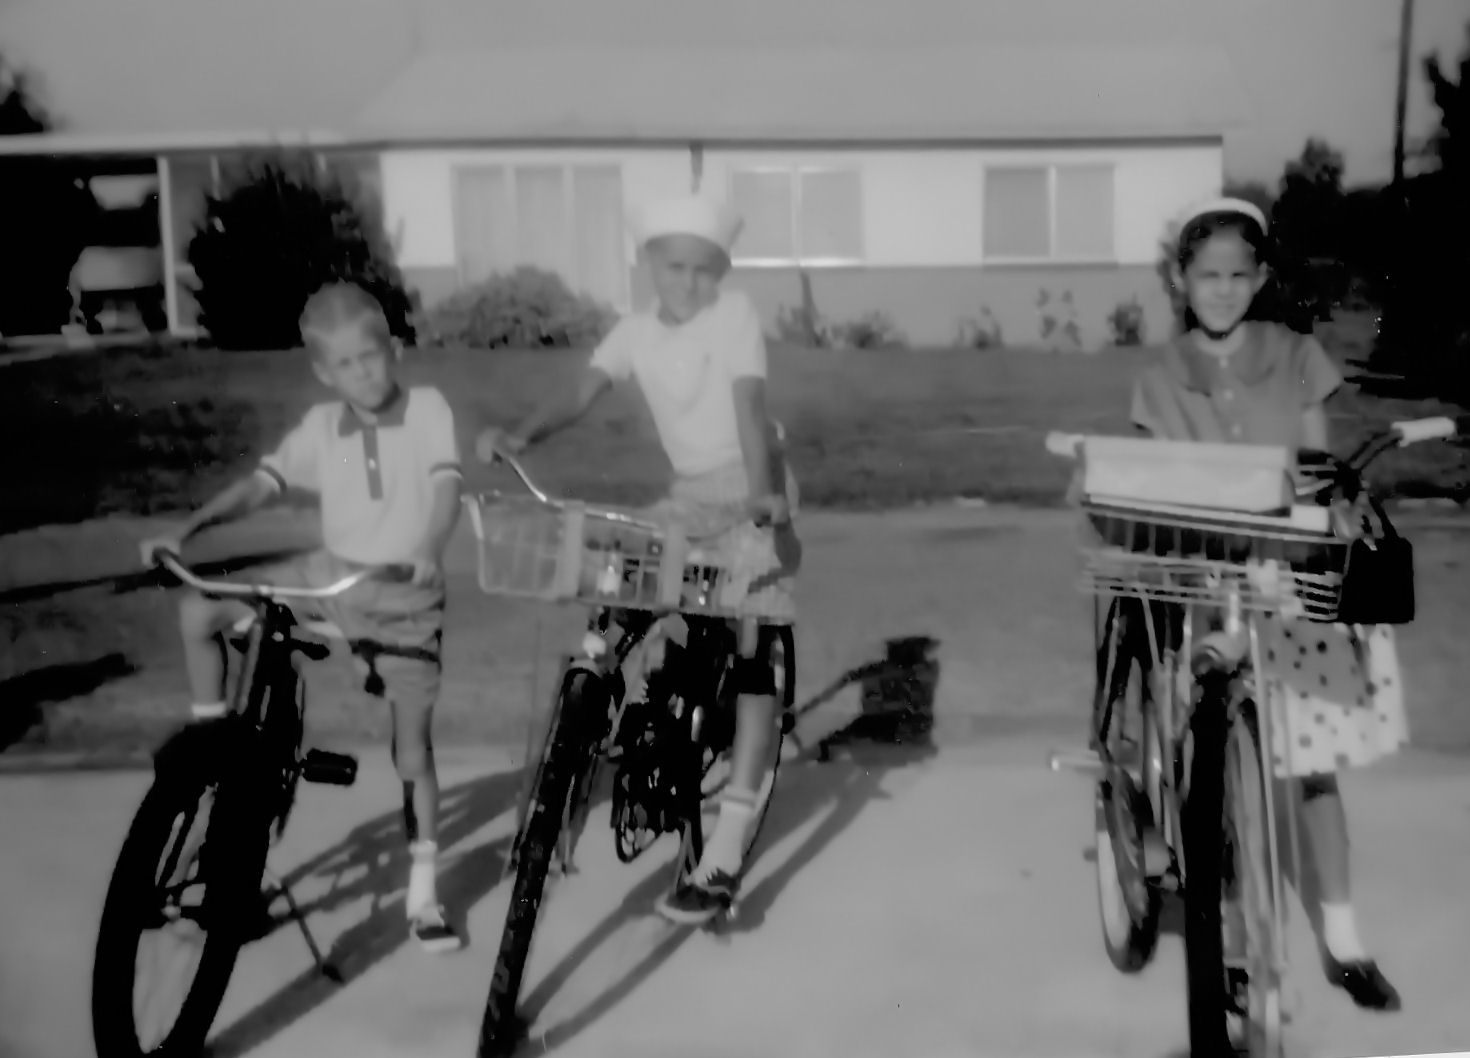 Larry, David, Brenda on bikes